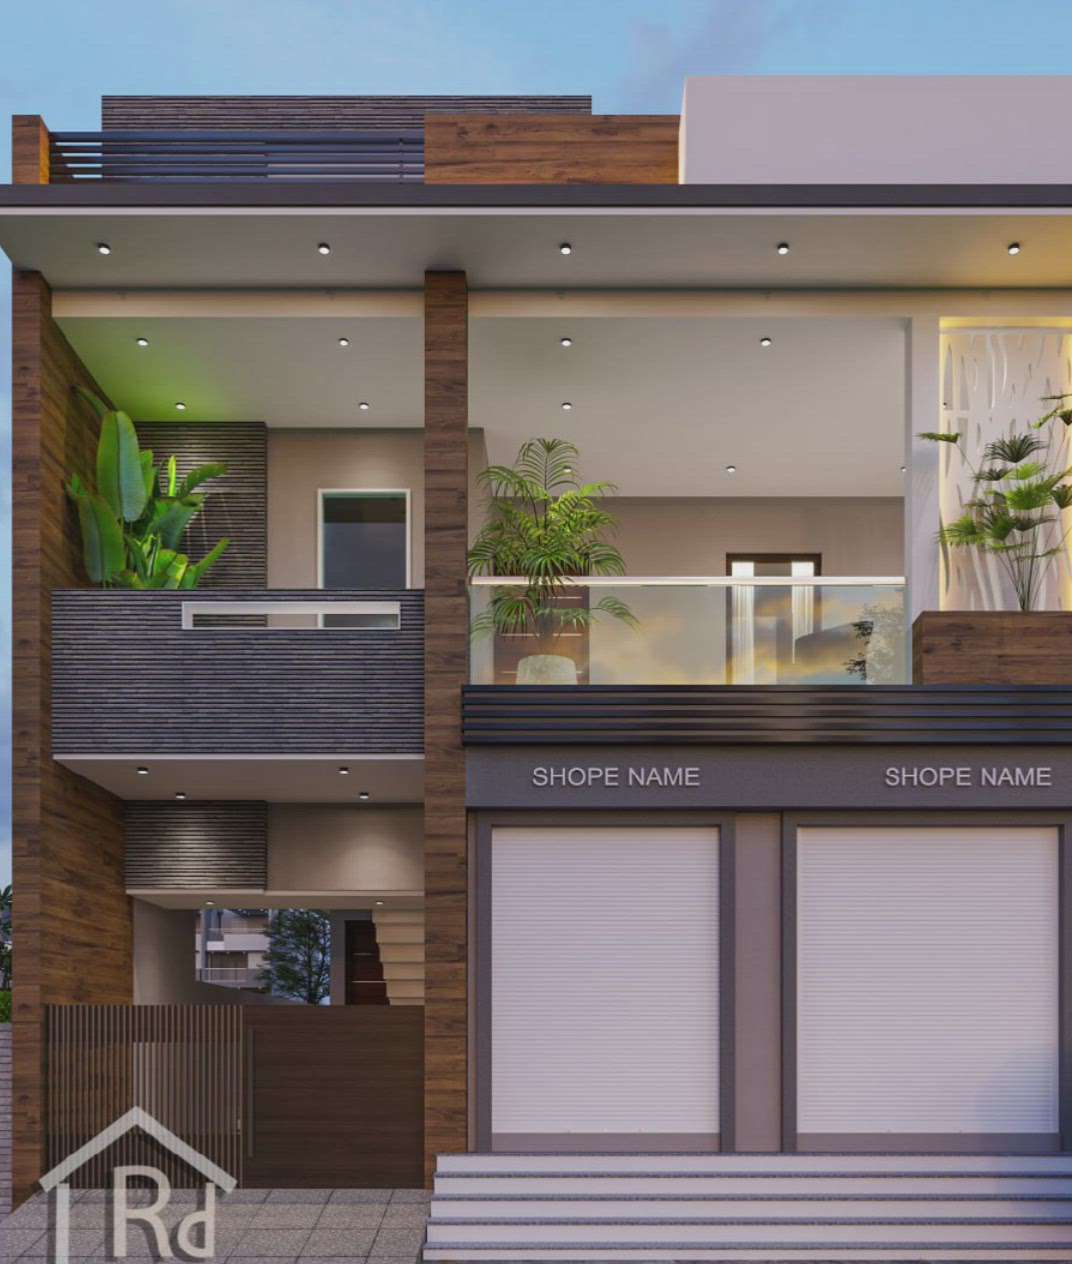 Render Design Studio
renderdesignstudio2603@gmail.com
9784212603
 #HouseDesigns  #SmallHouse  #exteriordesigns  #exteriorvideo  #exterior3D  #ElevationHome  #3D_ELEVATION  #HouseConstruction  #30x60houseplan  #3dmodeling